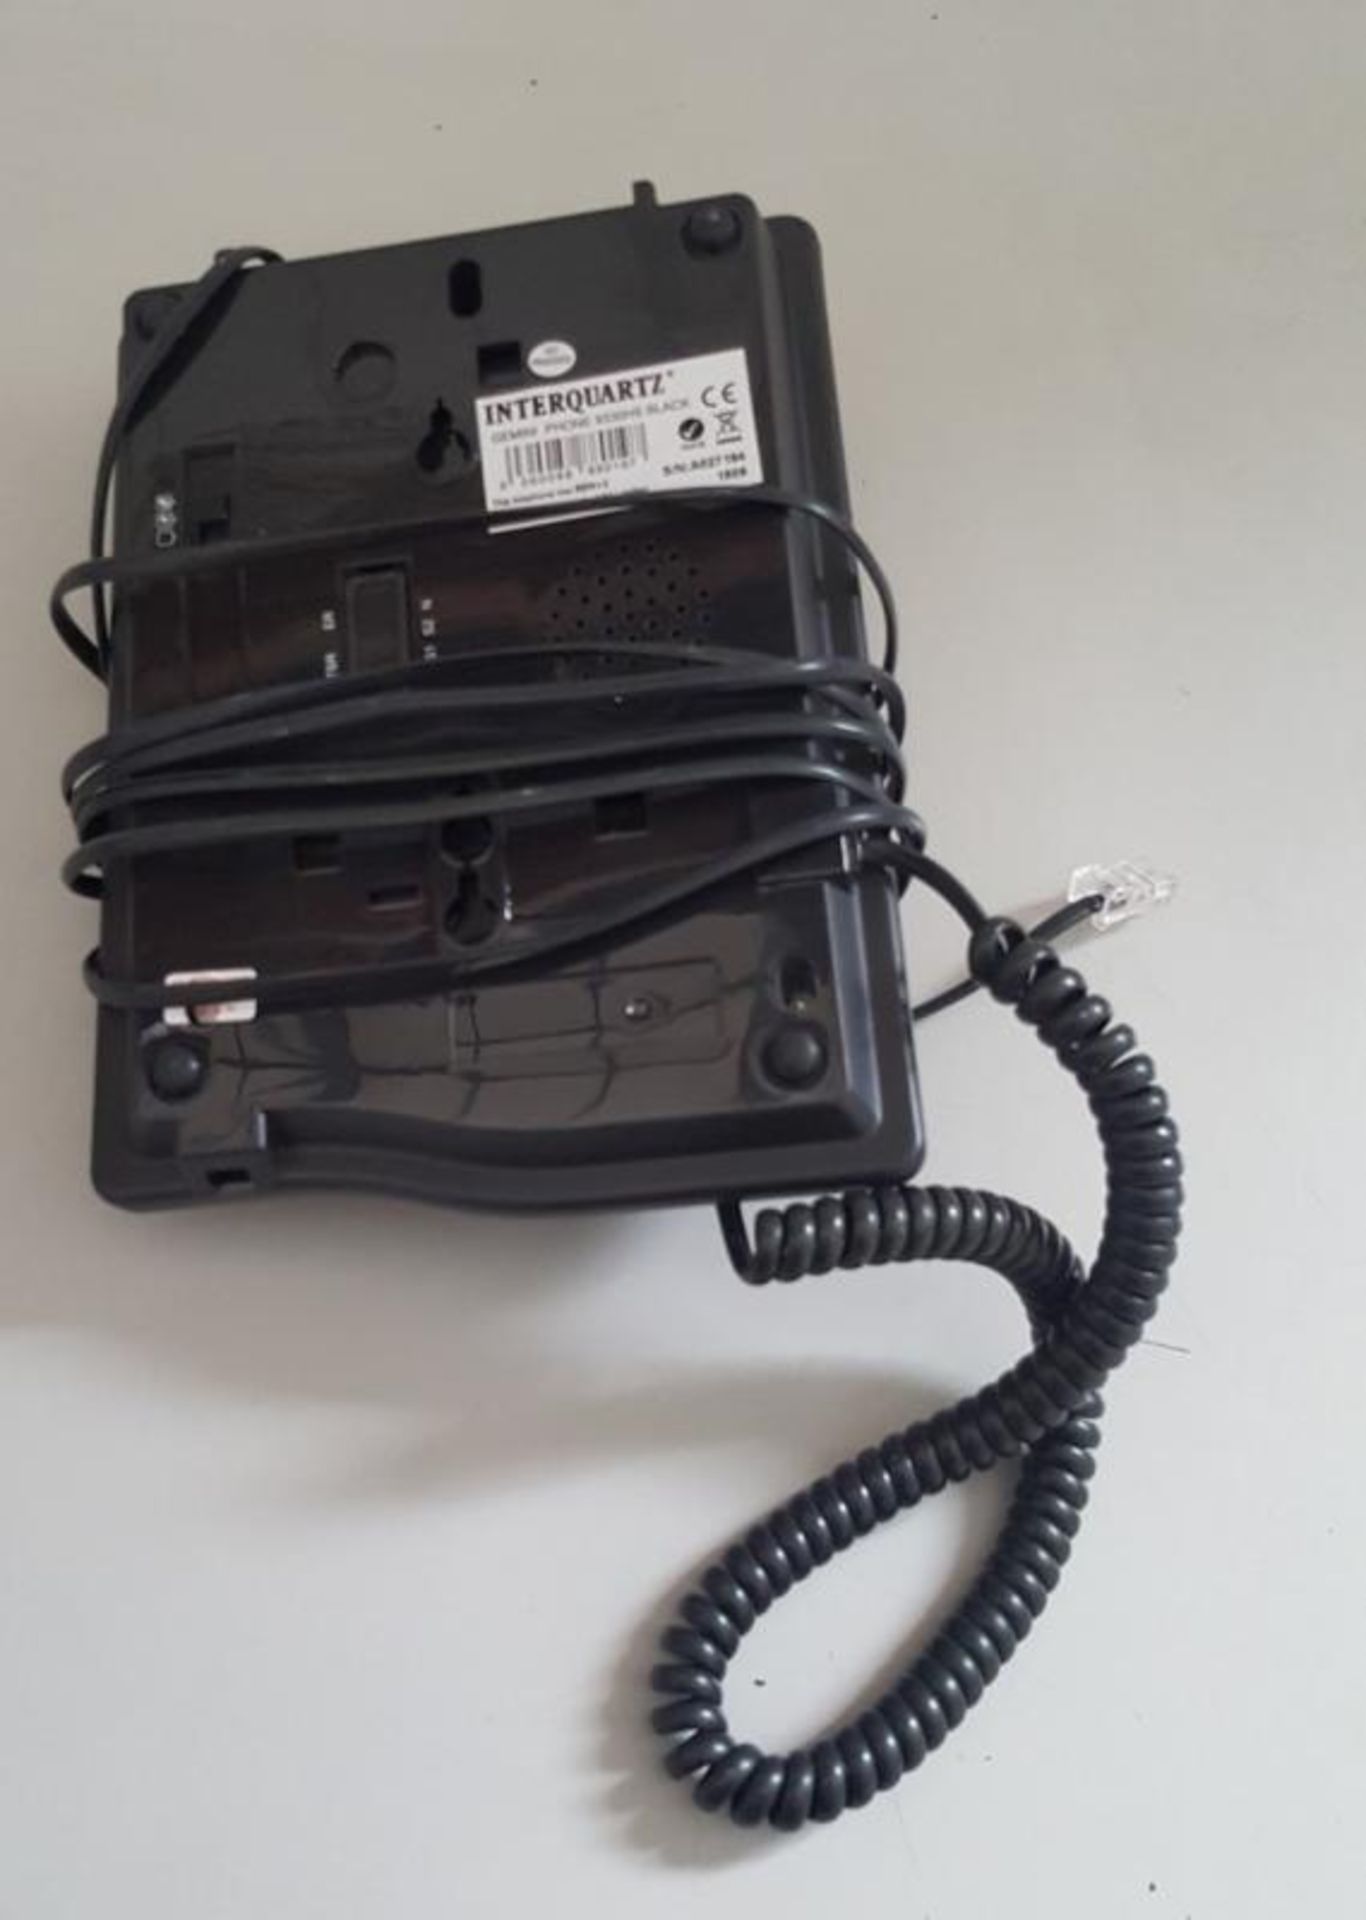 1 x Interquartz Gemini Basic 9330 Corded Office Phone - Ref CQ235/K2 - CL379 - Location: Altrincham - Image 2 of 3